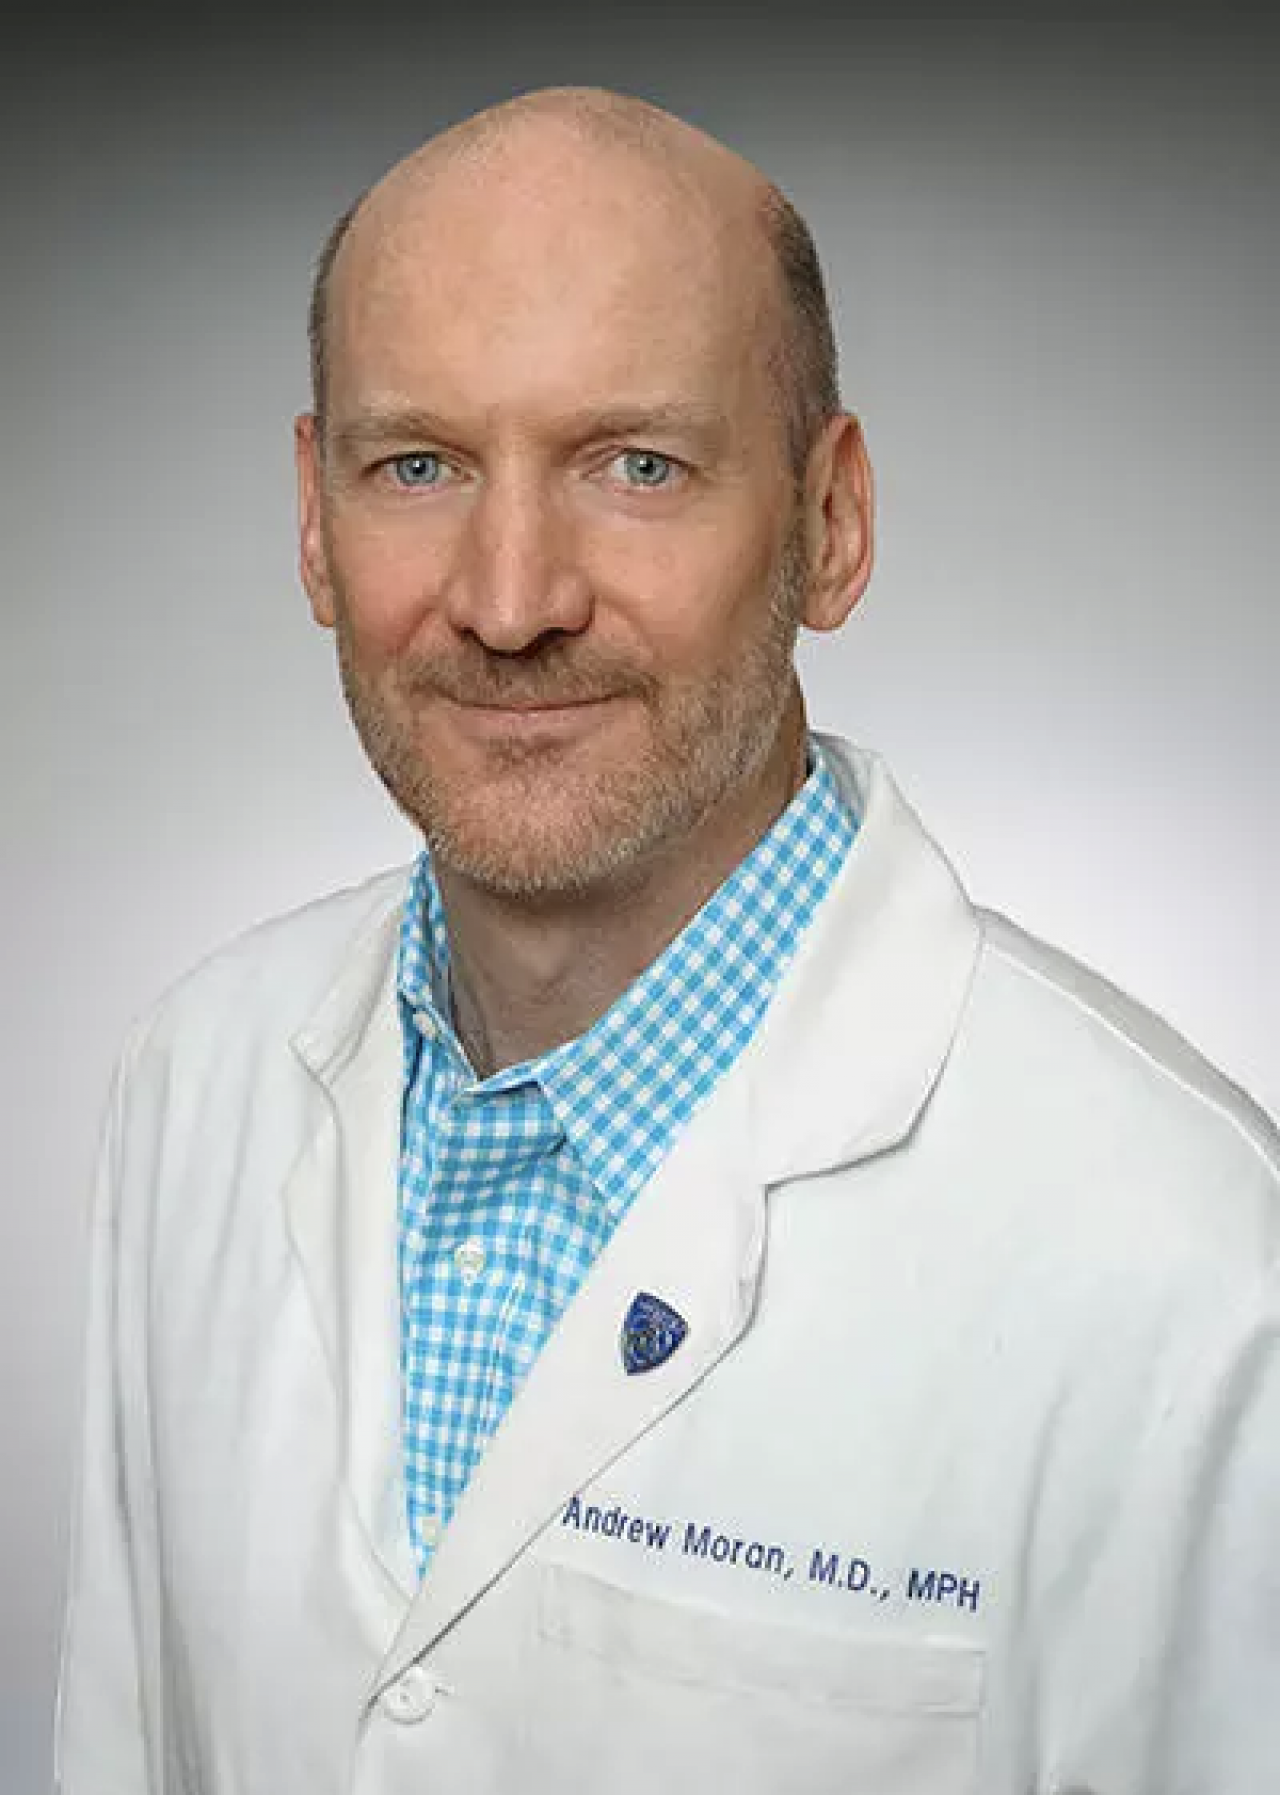 Columbia internist Andrew Moran, MD